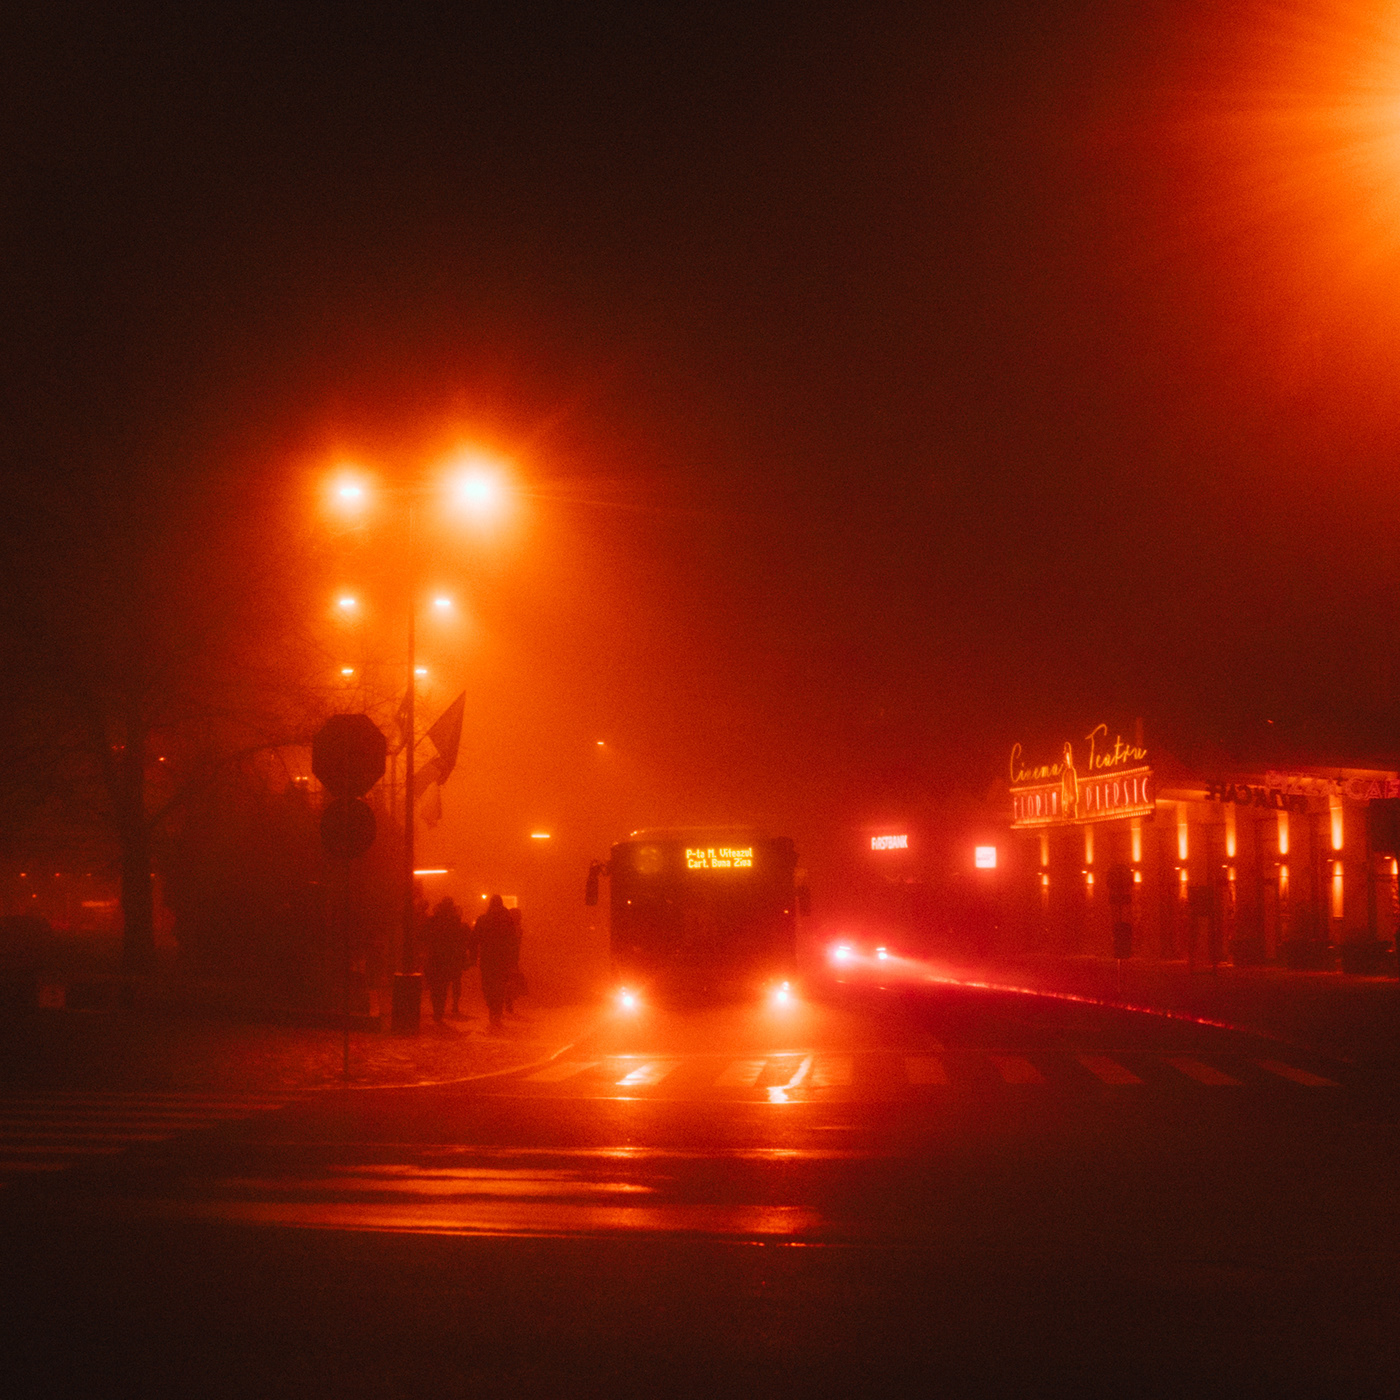 cluj-napoca cluj romania street photography Urban fog